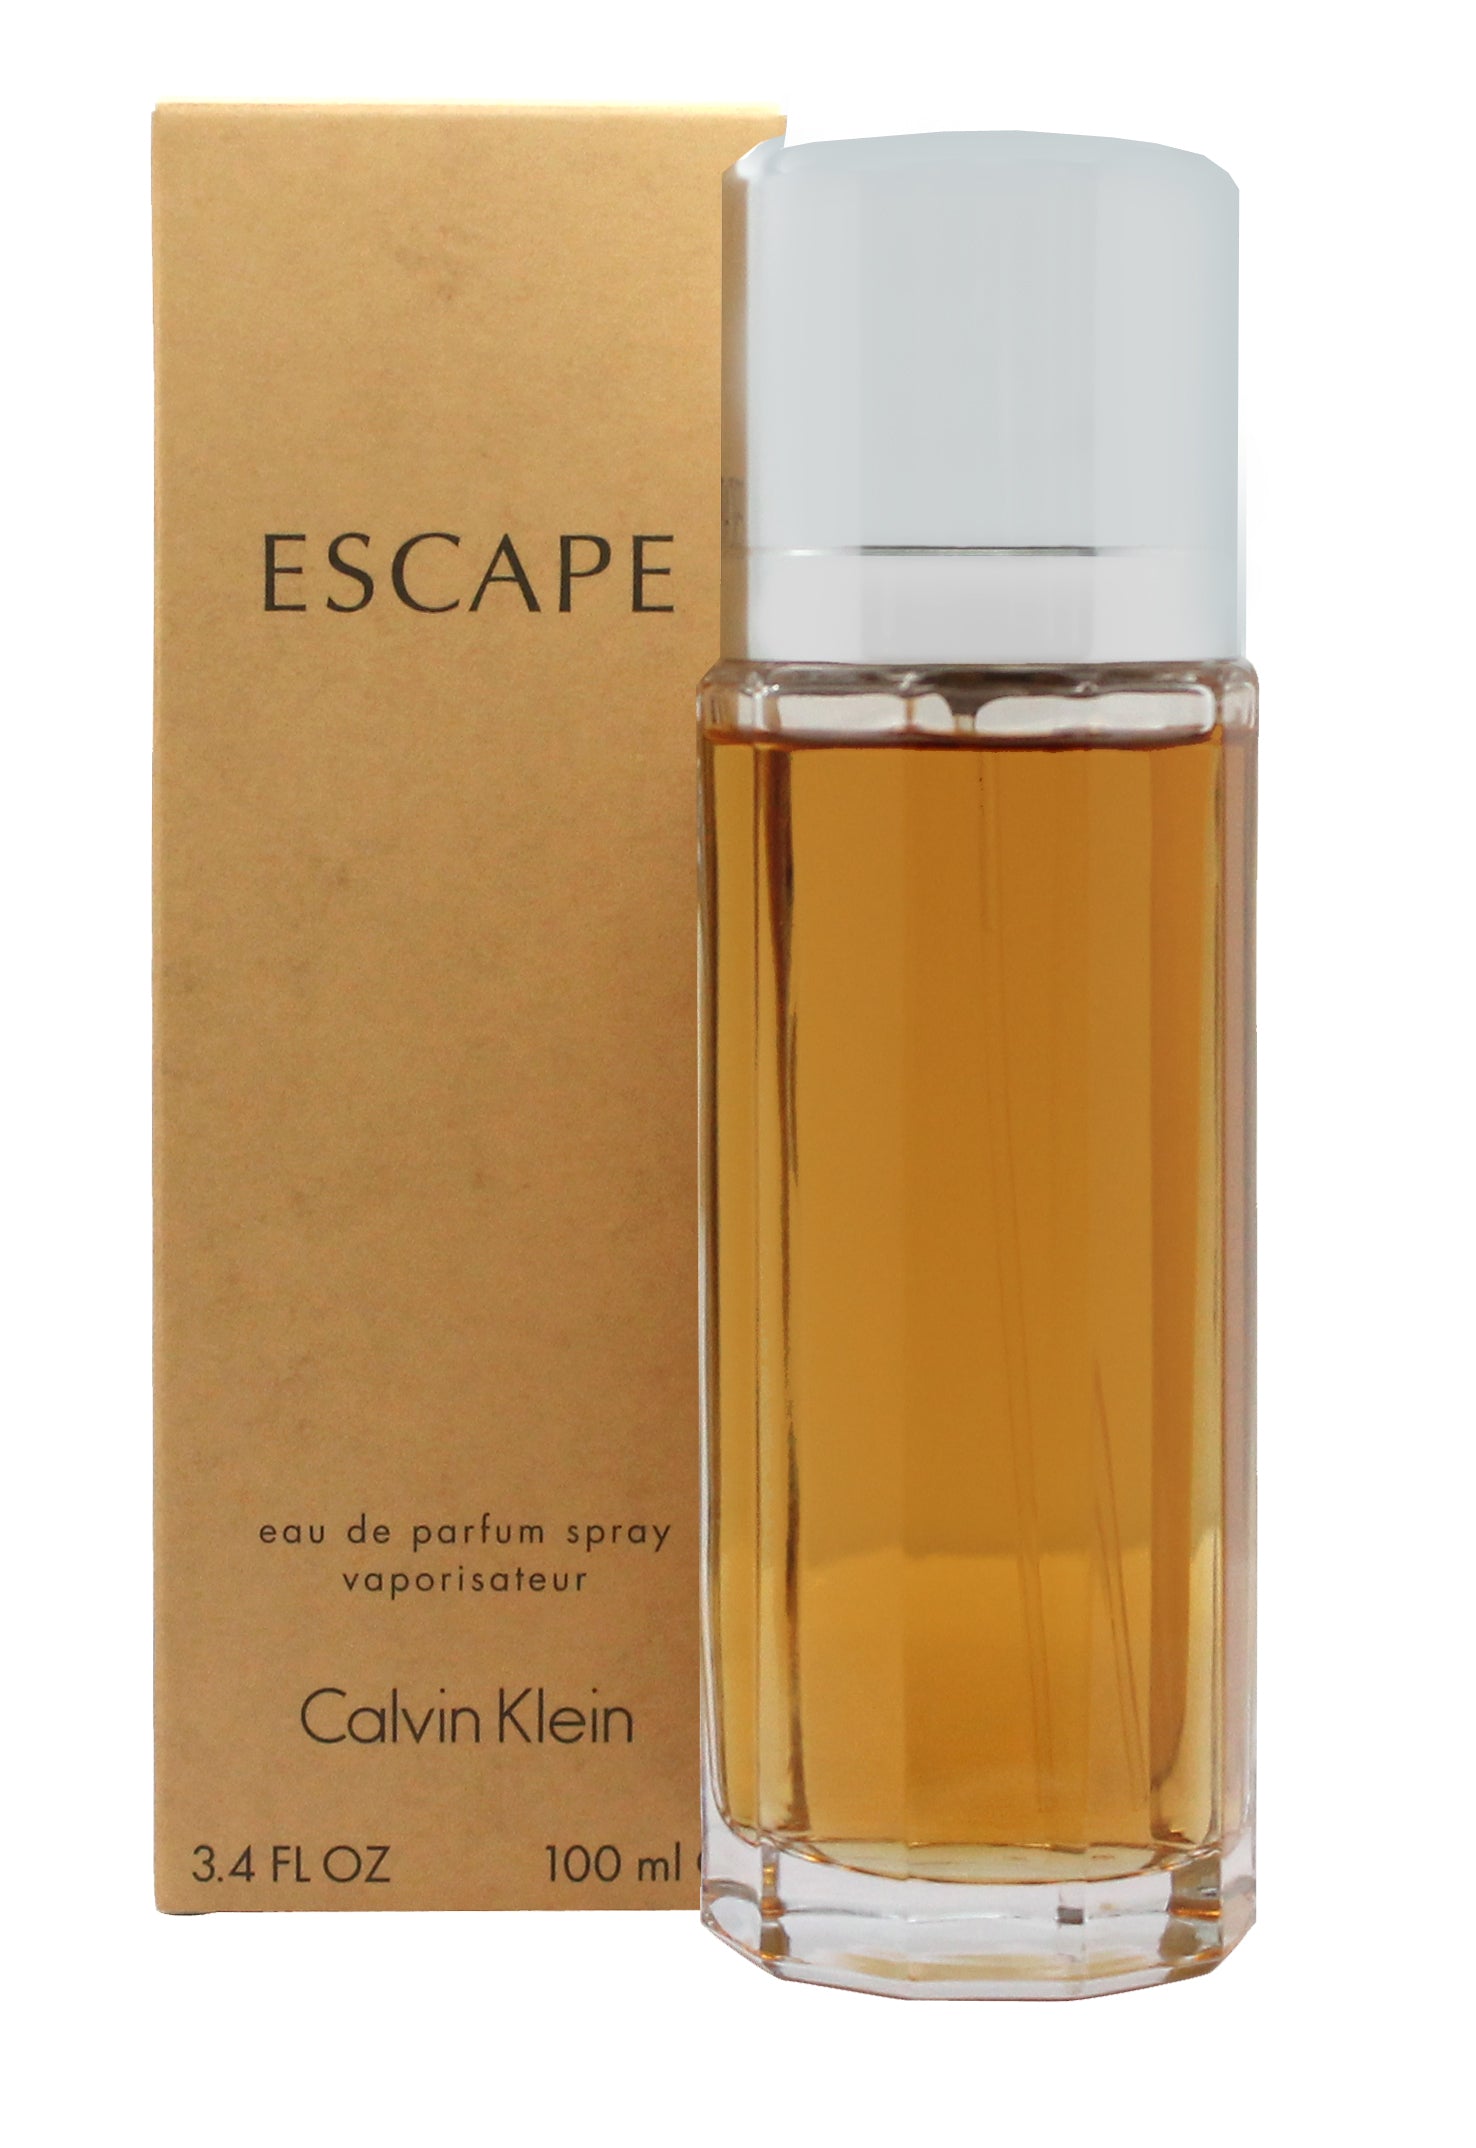 View Calvin Klein Escape Eau de Parfum 100ml Spray information